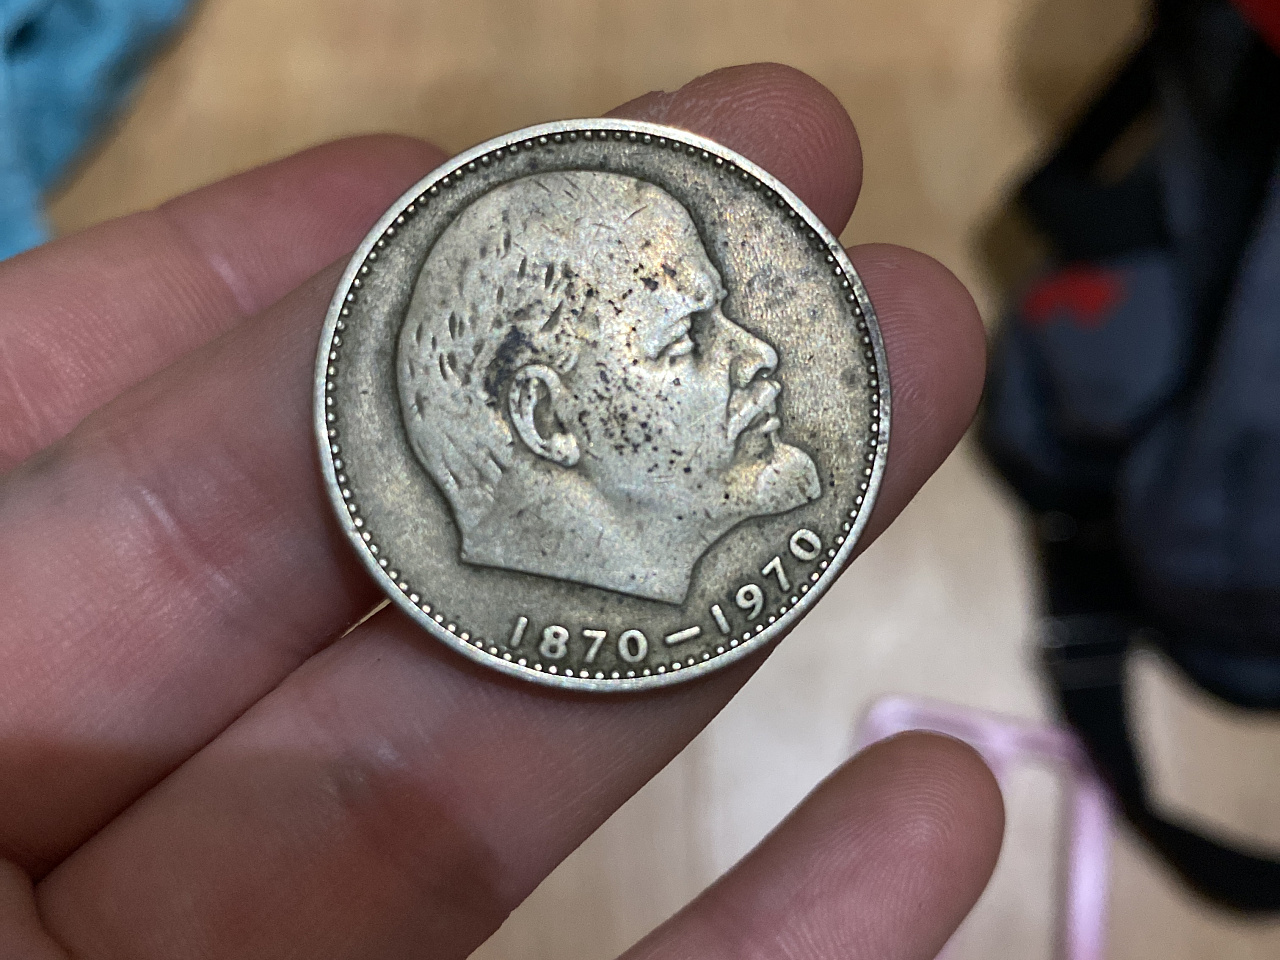 фото юбилейных монет с 1961